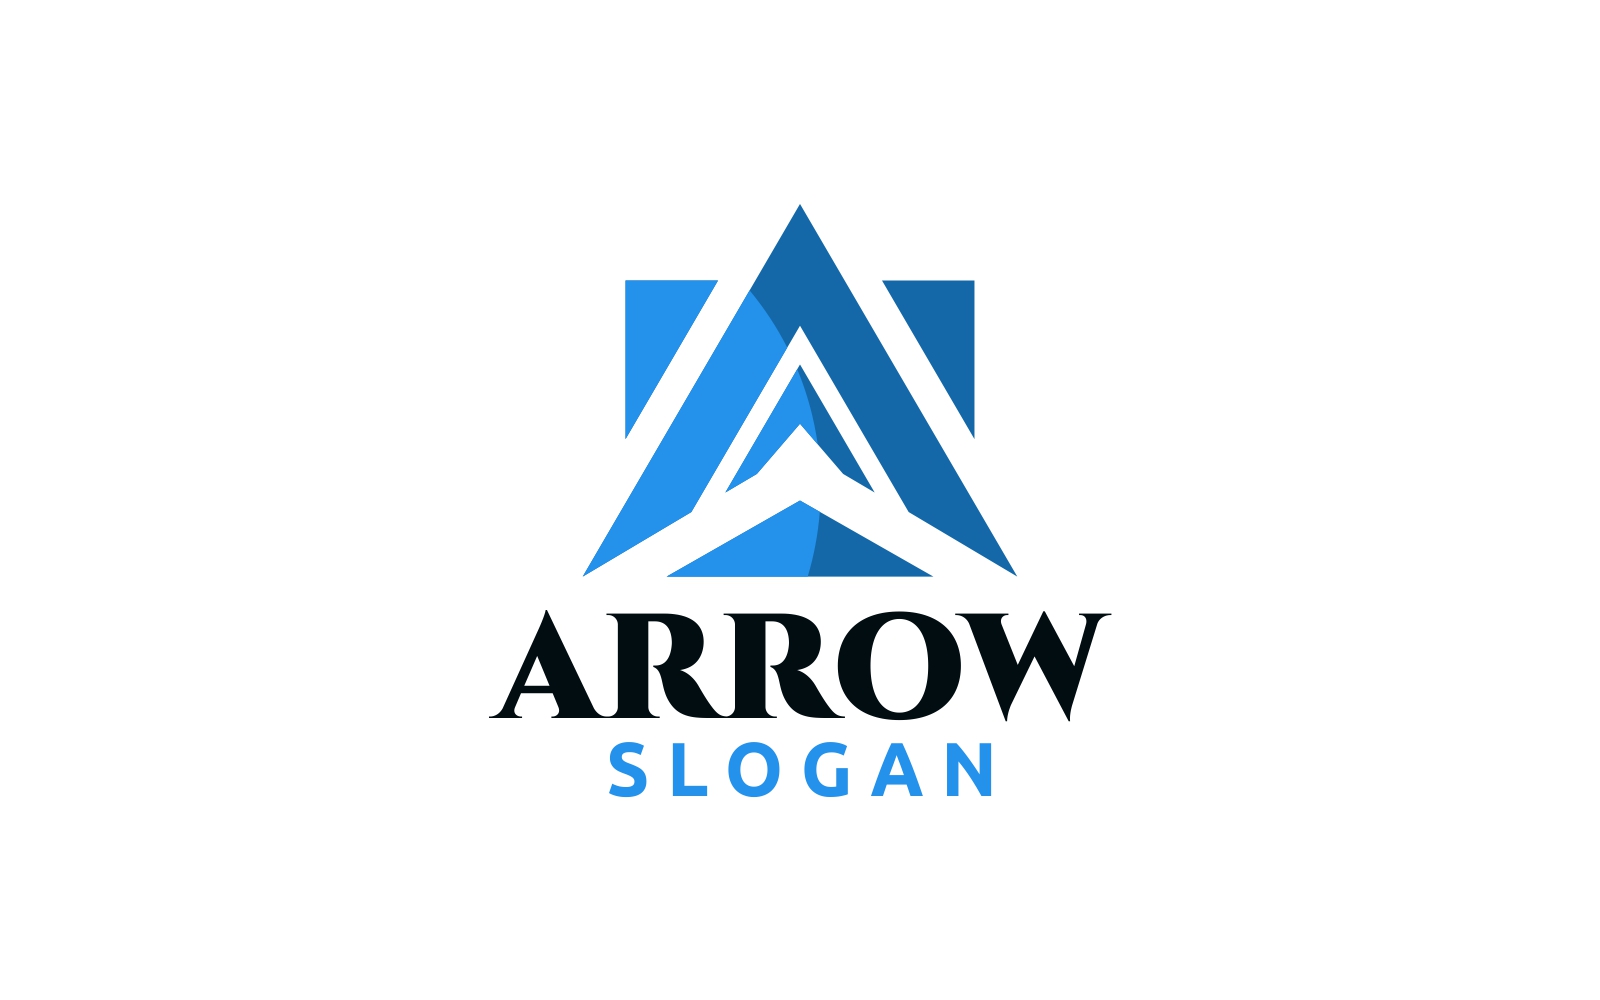 A Letter Arrow Logo Template